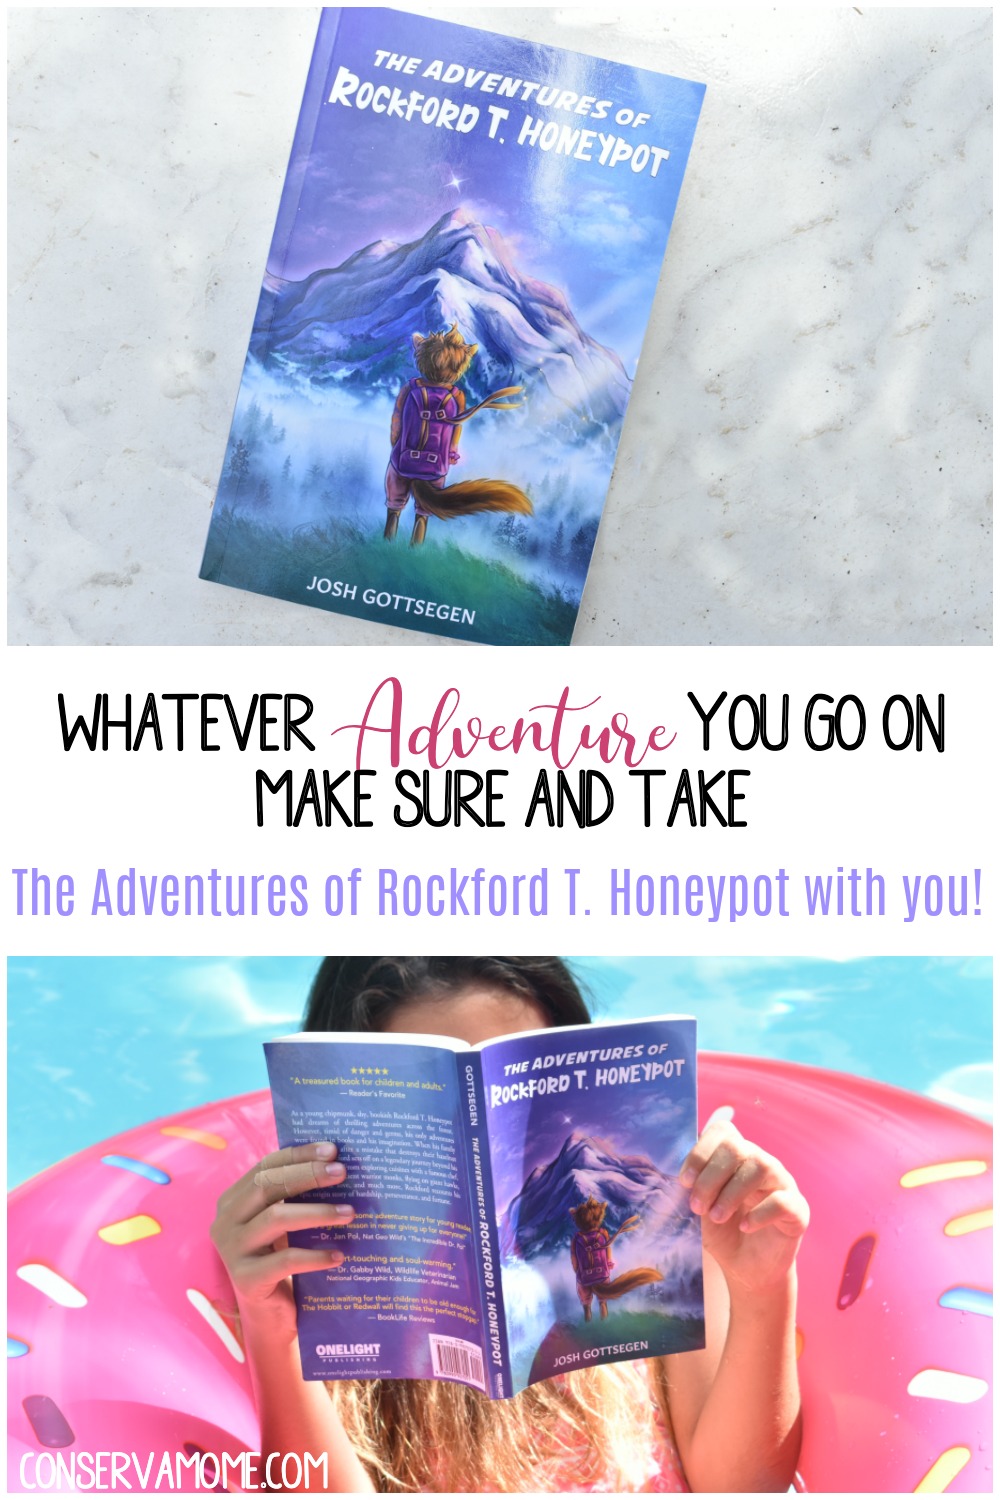 The Adventures of Rockford T. Honeypot